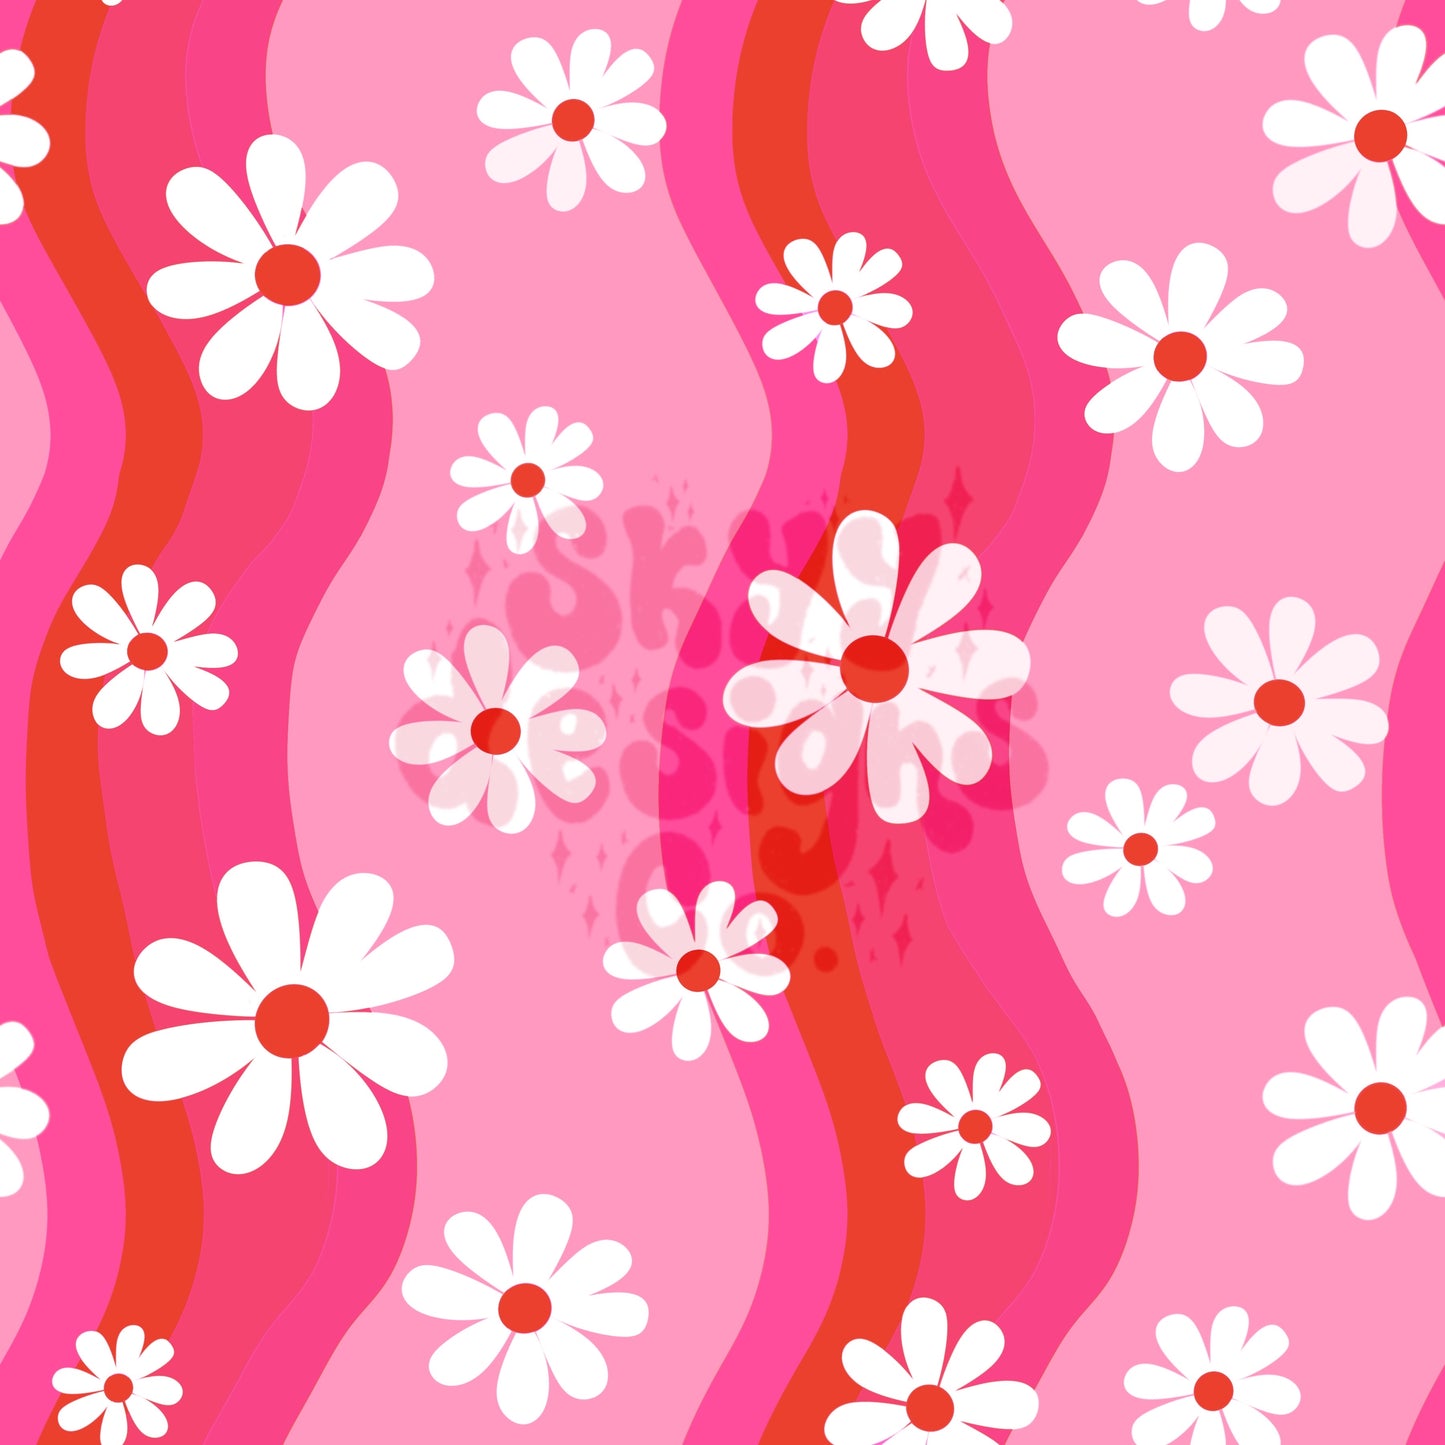 Valentine wavy daisy pattern design